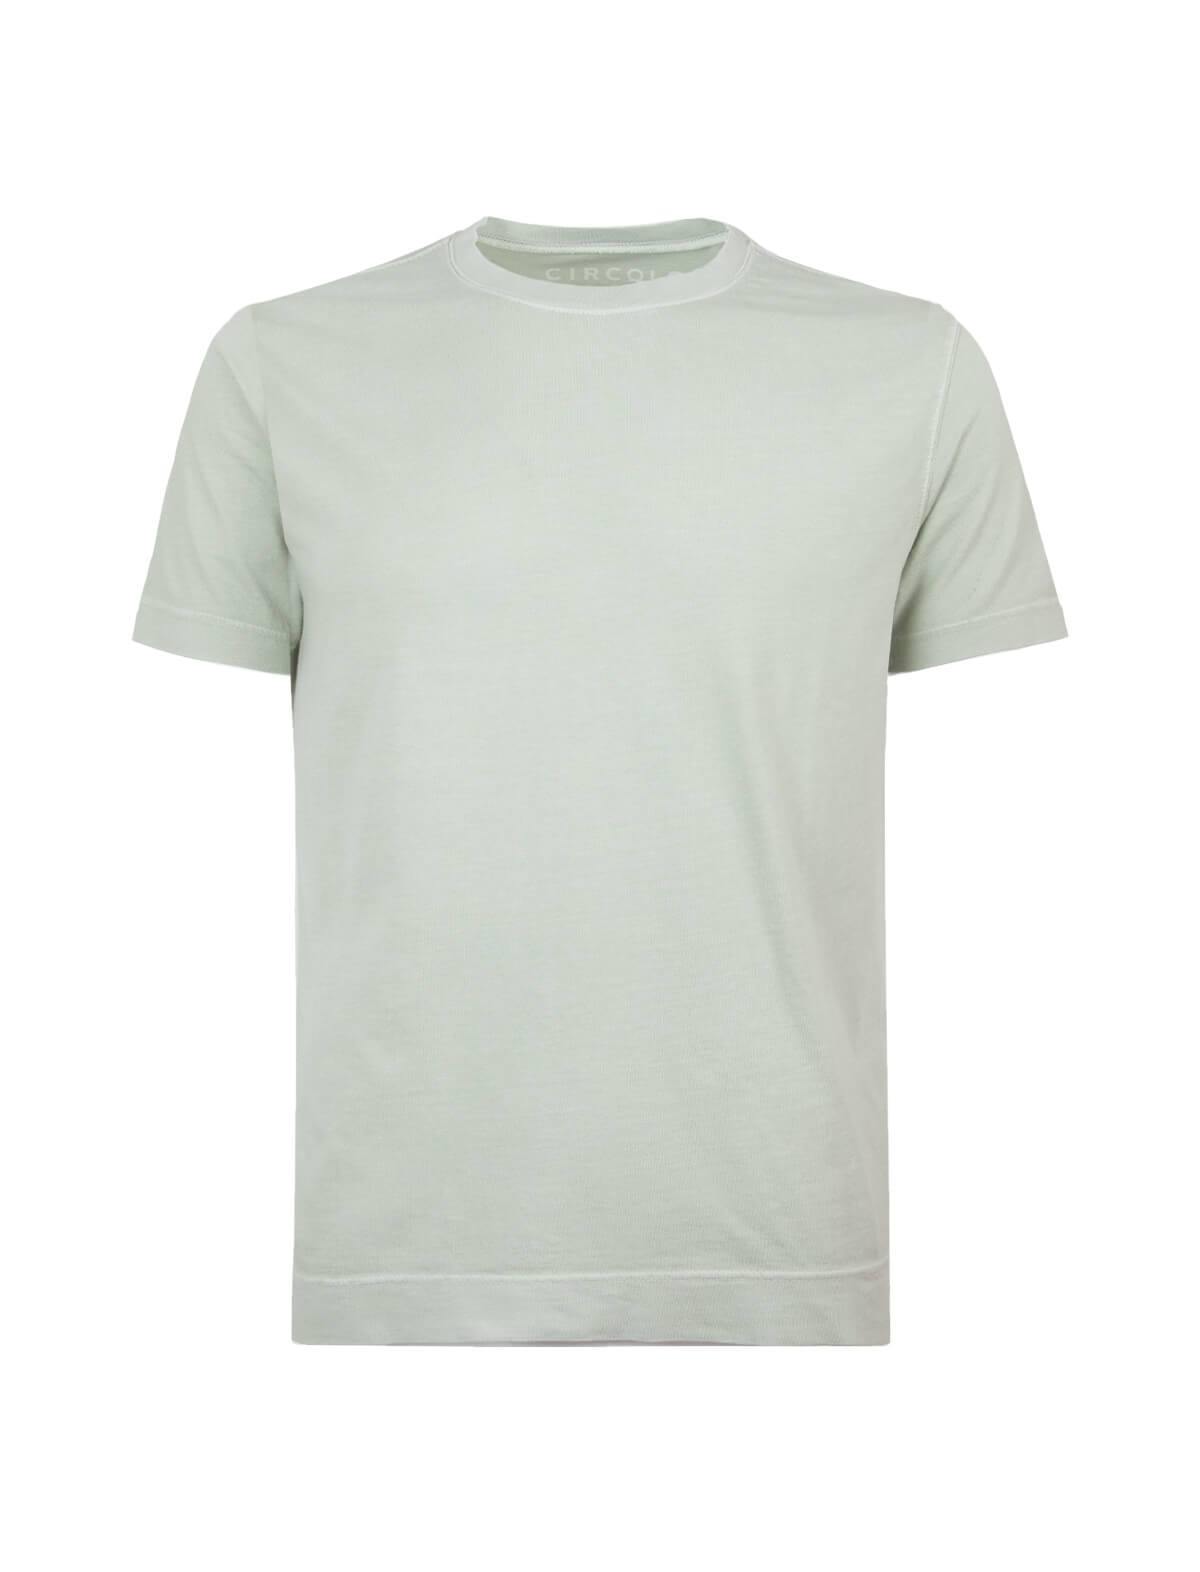 CIRCOLO 1901 Crew Neck Cotton T-Shirt in Pale Green | CLOSET Singapore